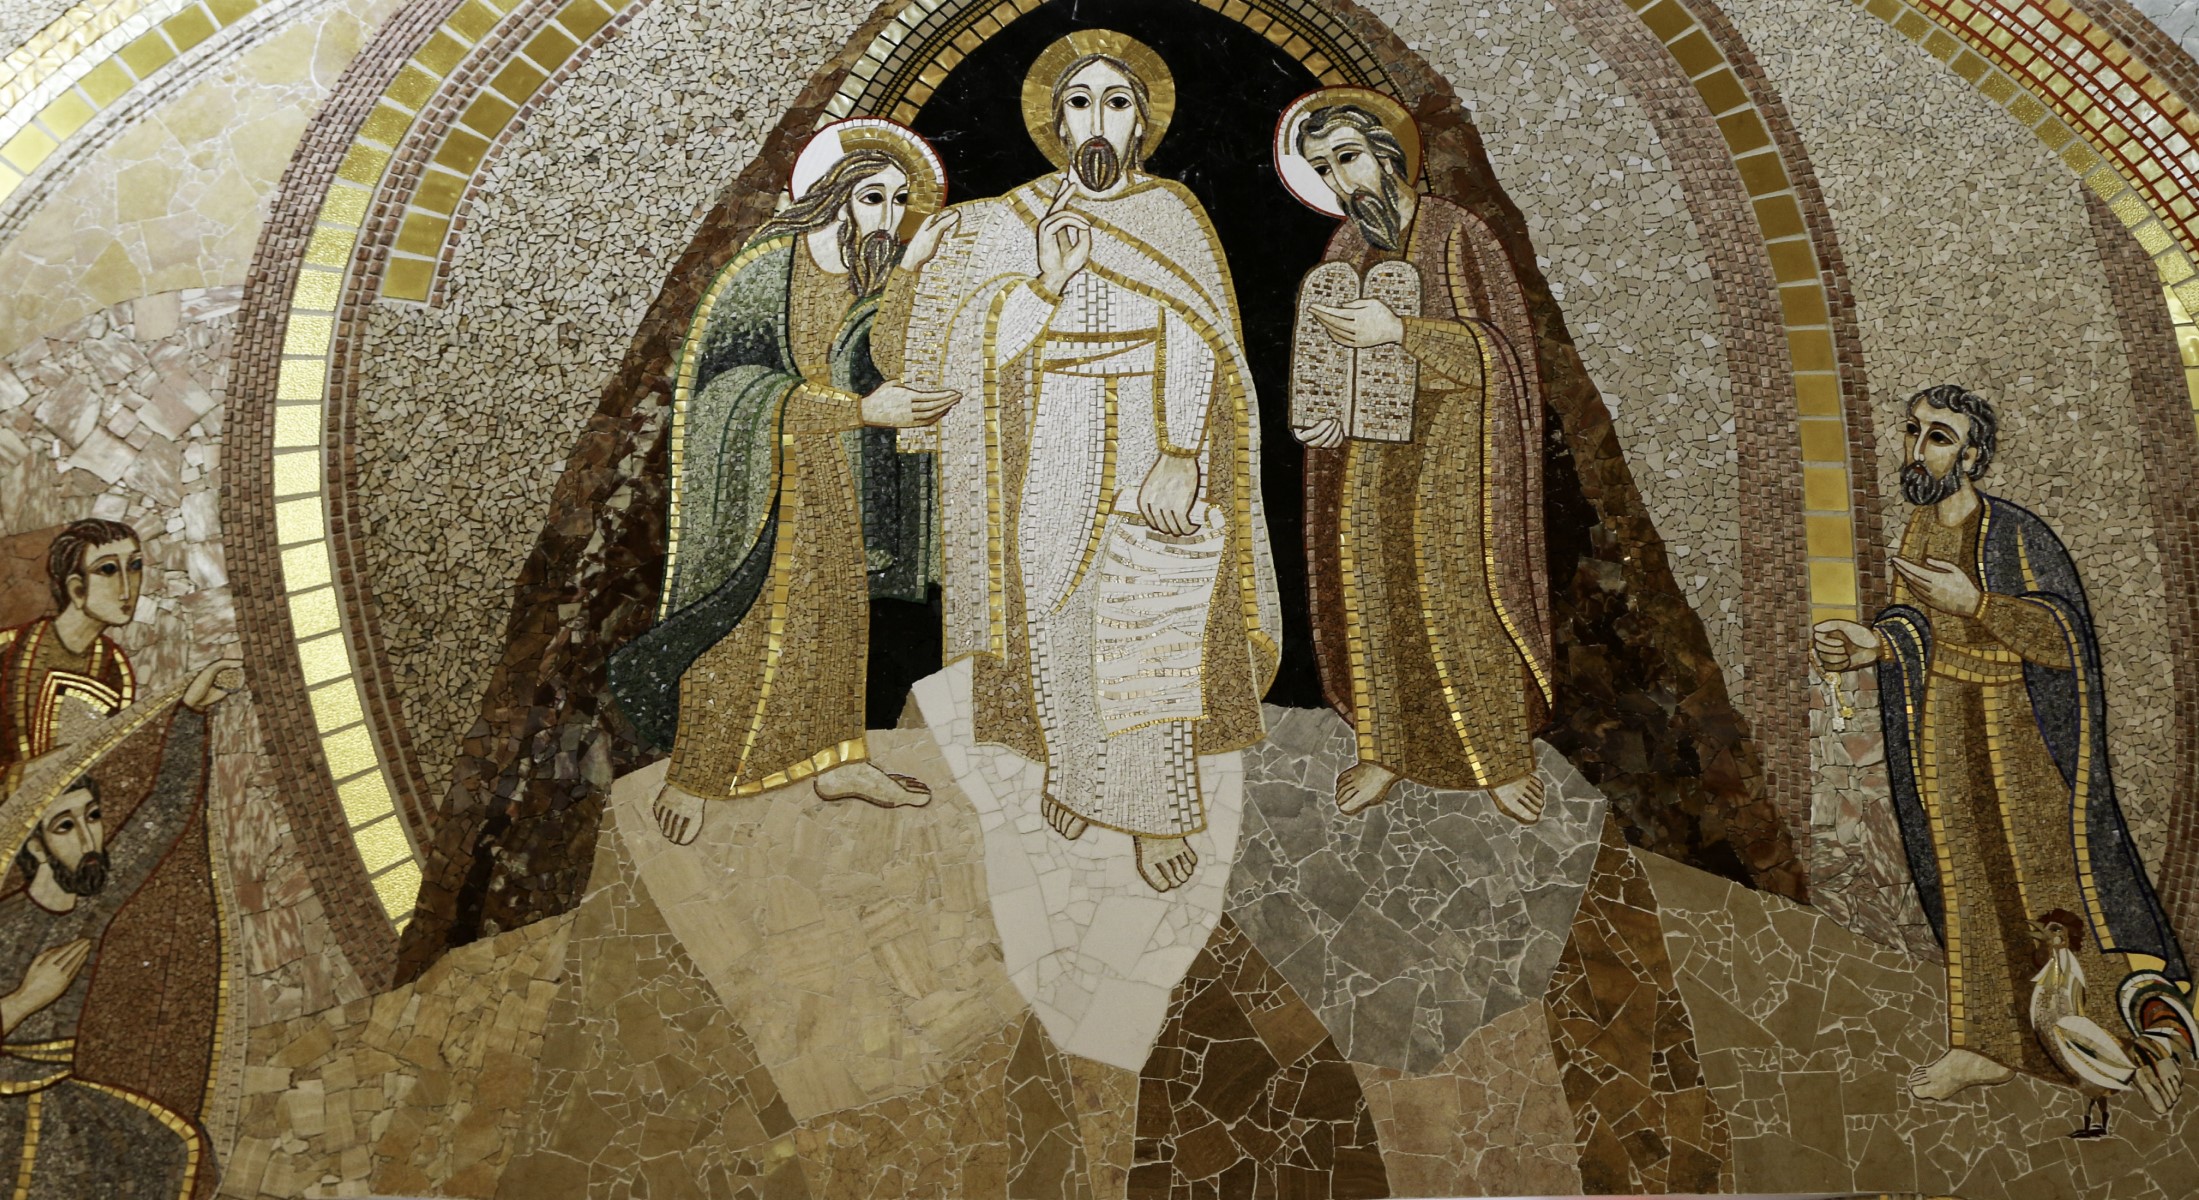 Our Transfiguration